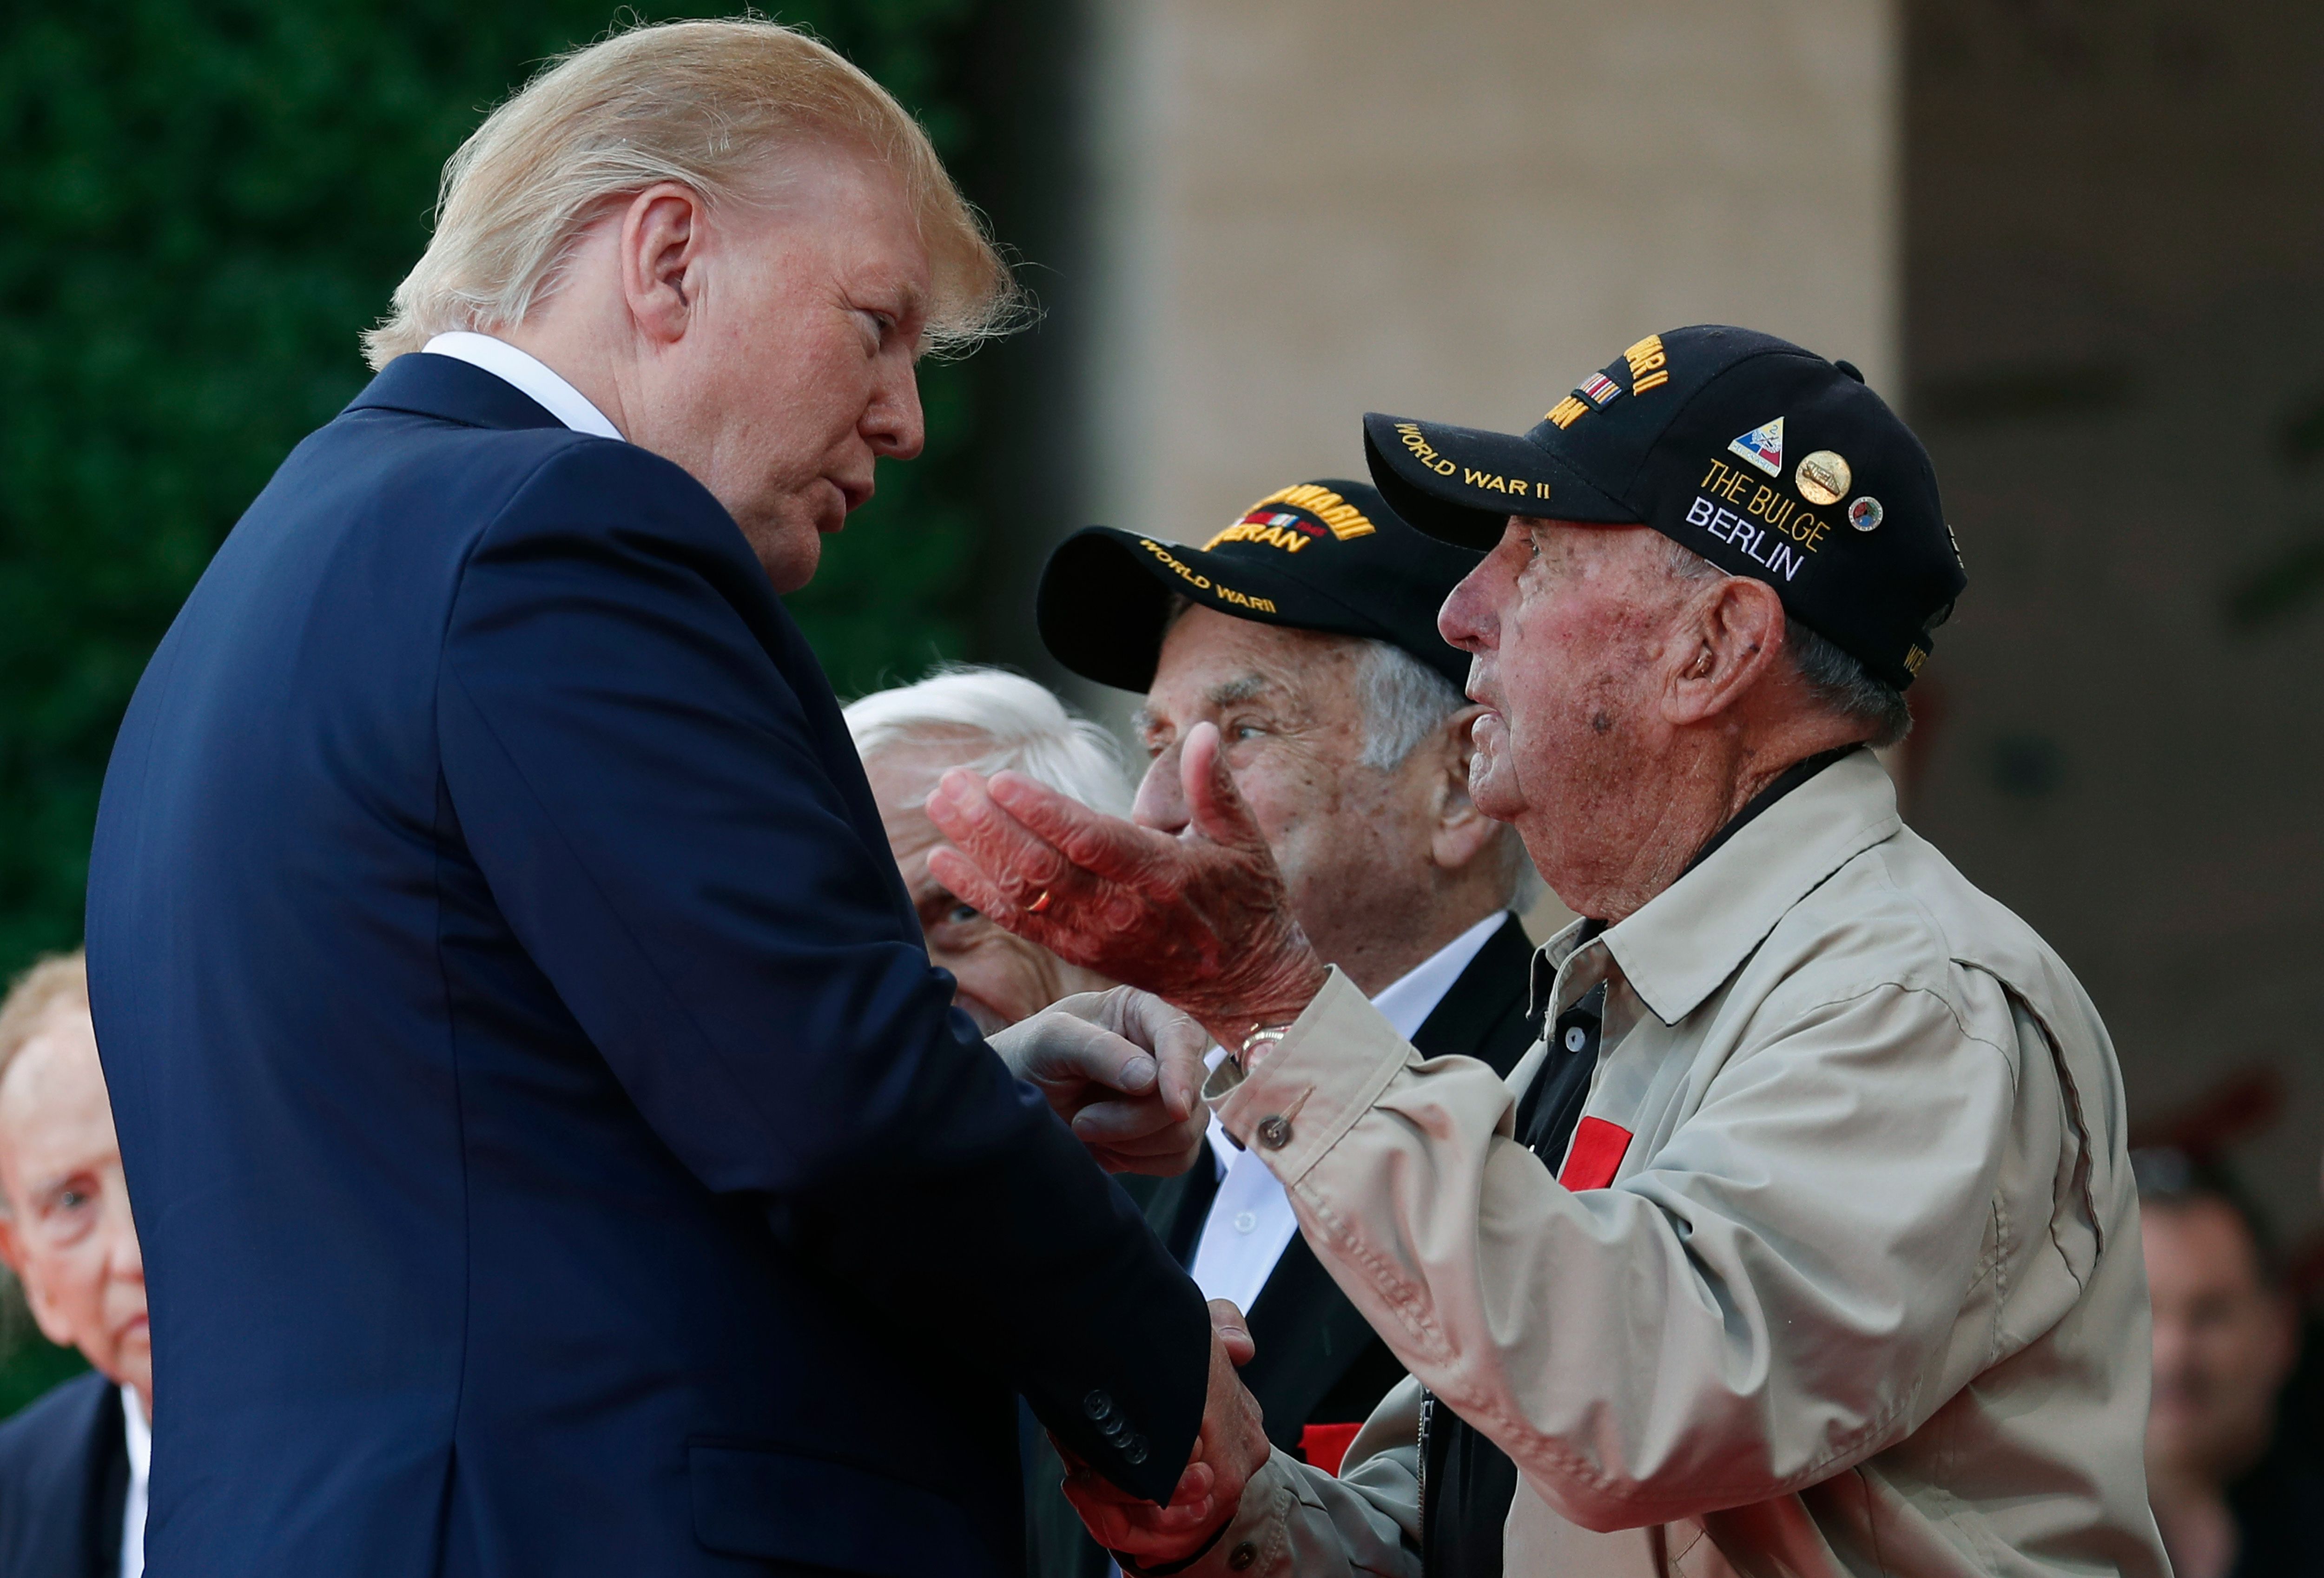 Trump greets a veteran at a D-Day commemoration ceremony